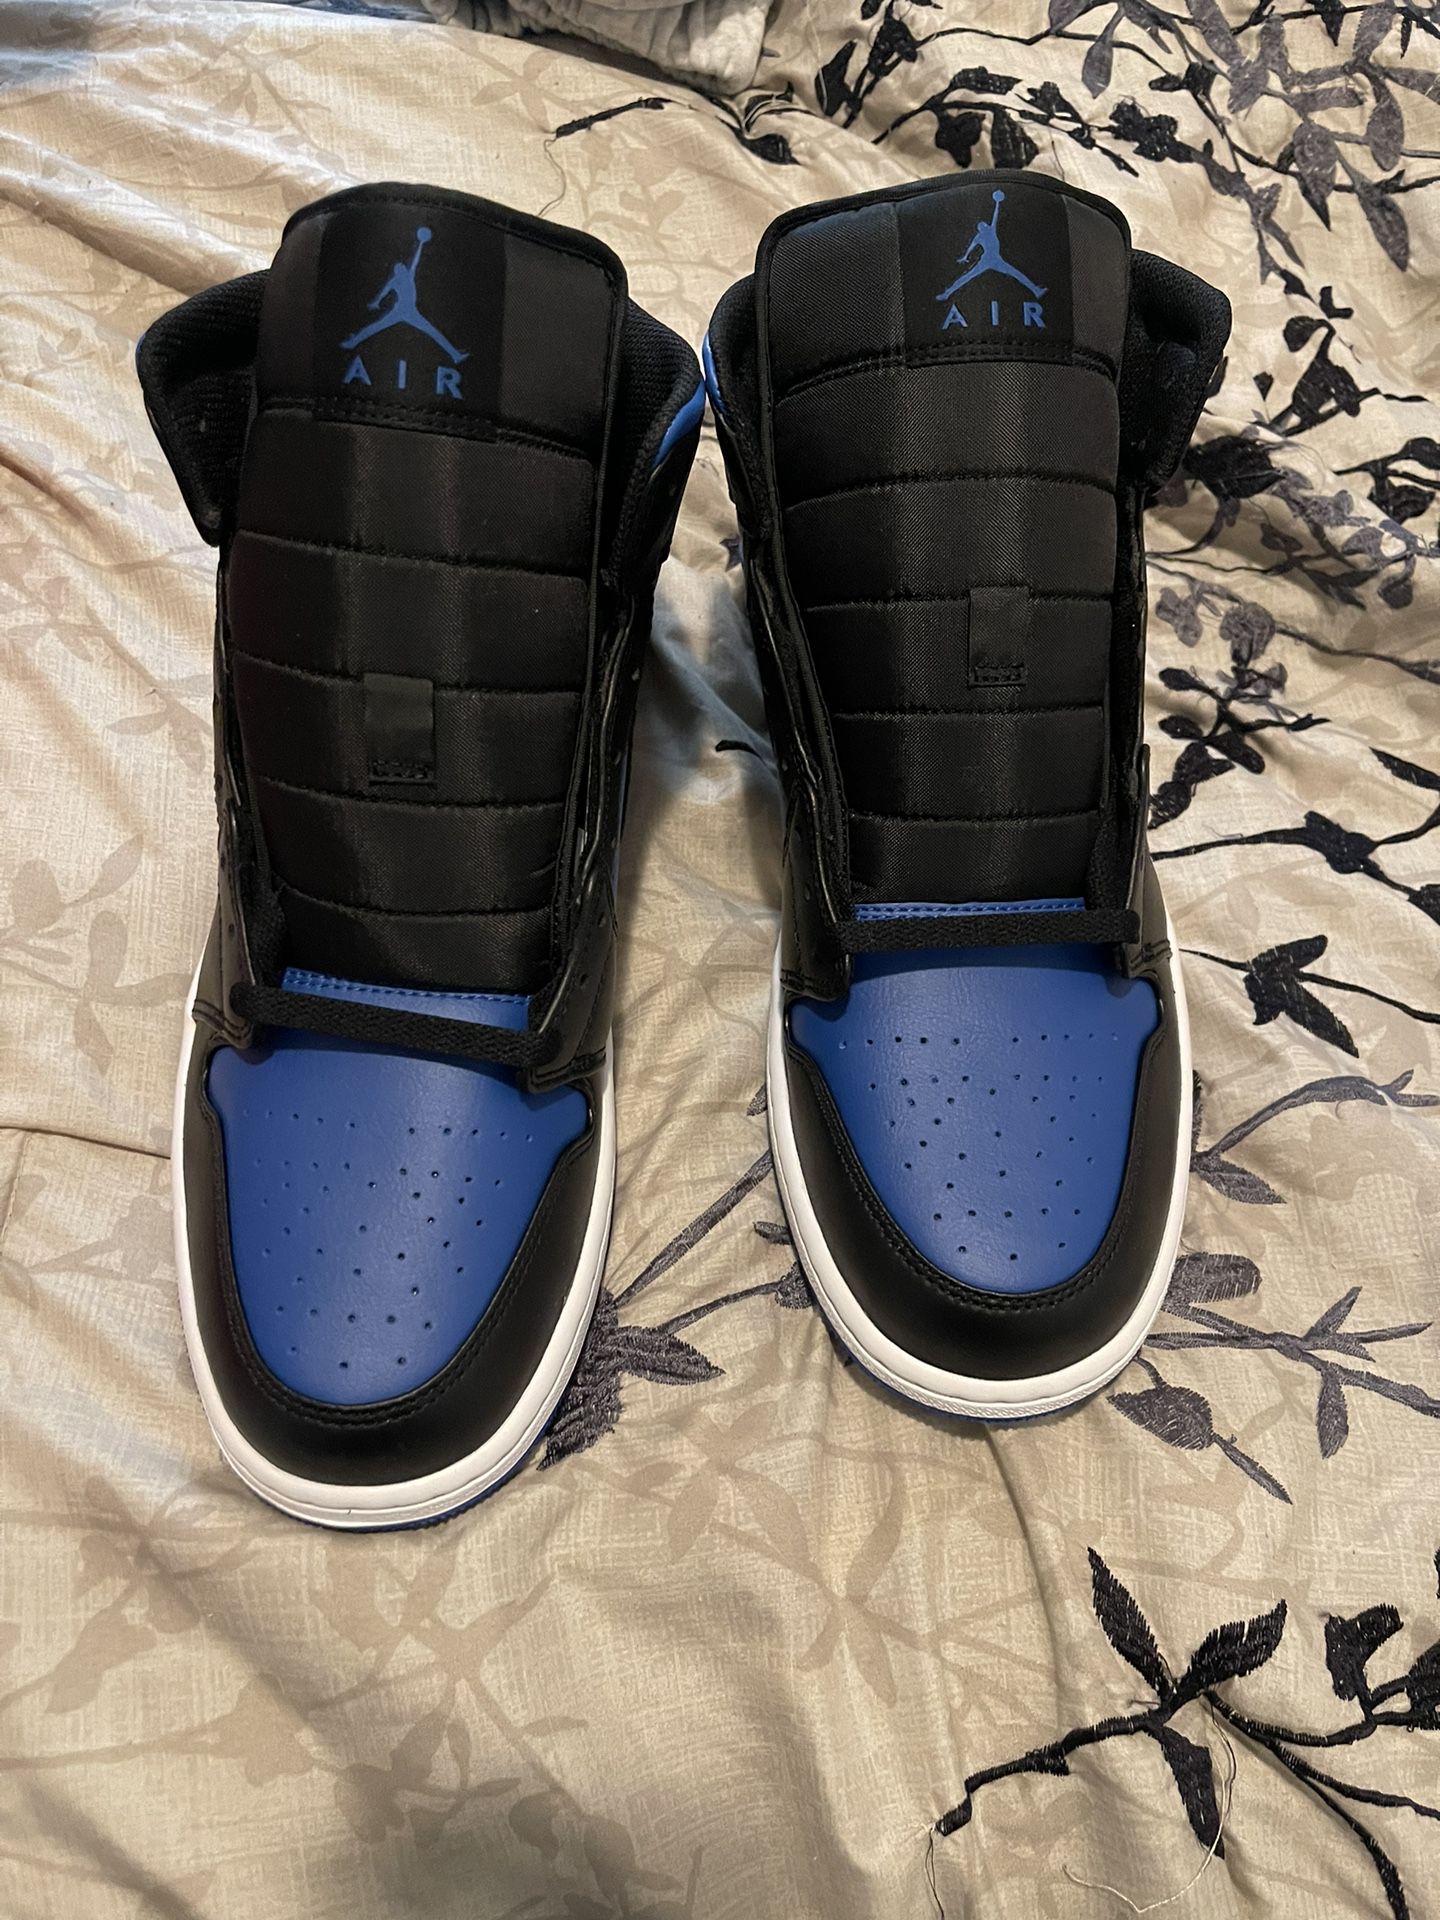 Air Jordan 1 Mid RoyalBlue/Black Men's Shoes 2023 Size 13 Style DQ8426 042 $135